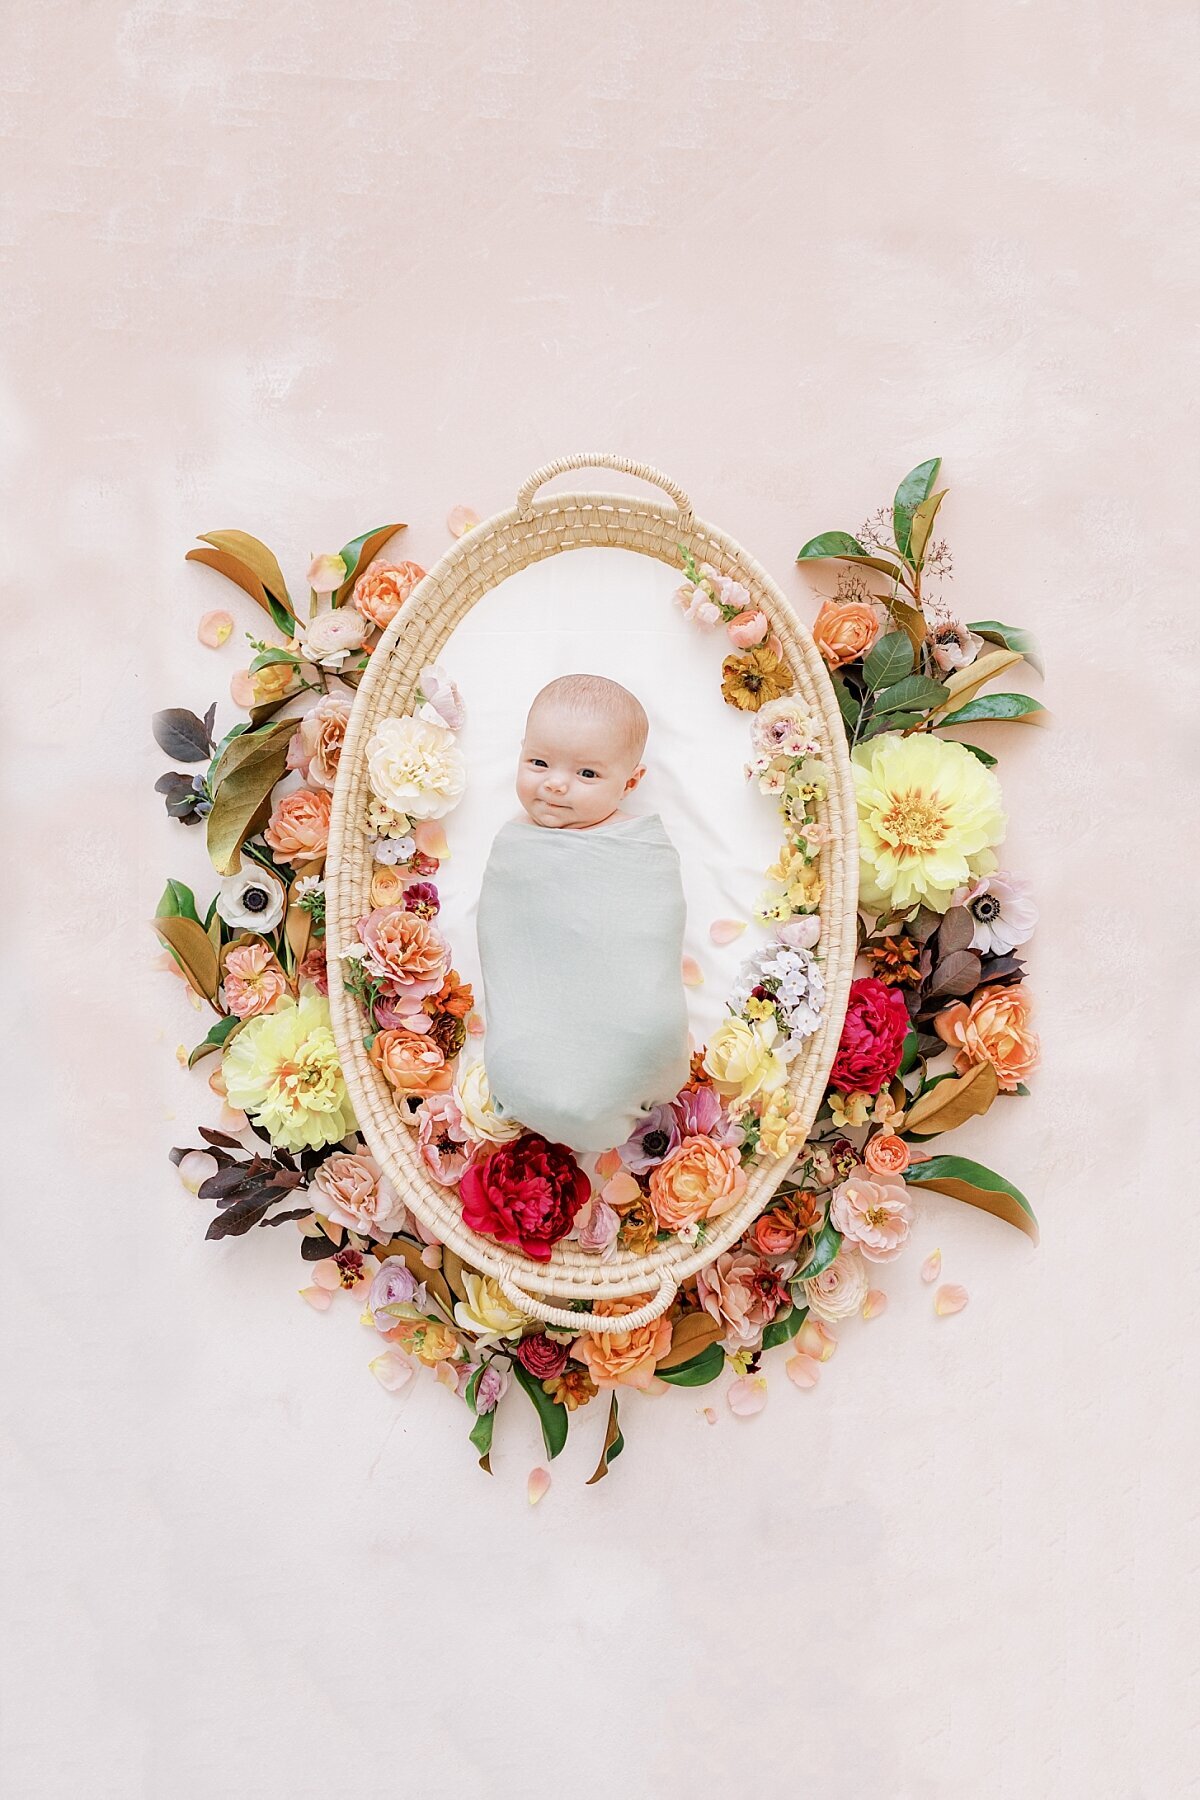 newborn girl with flowers around her in a basket